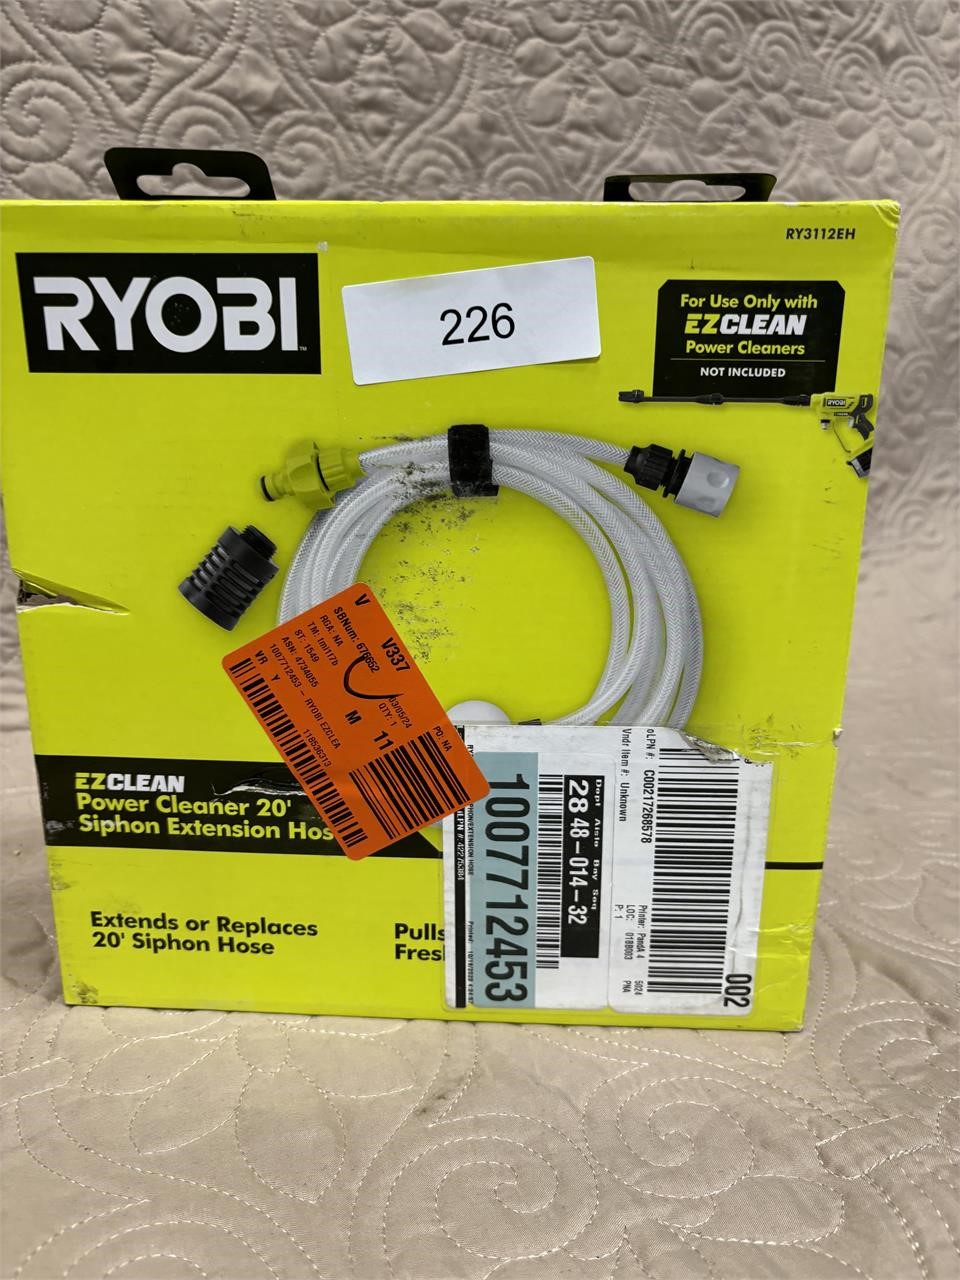 Ryobi EZ clean 20' siphon ext hose